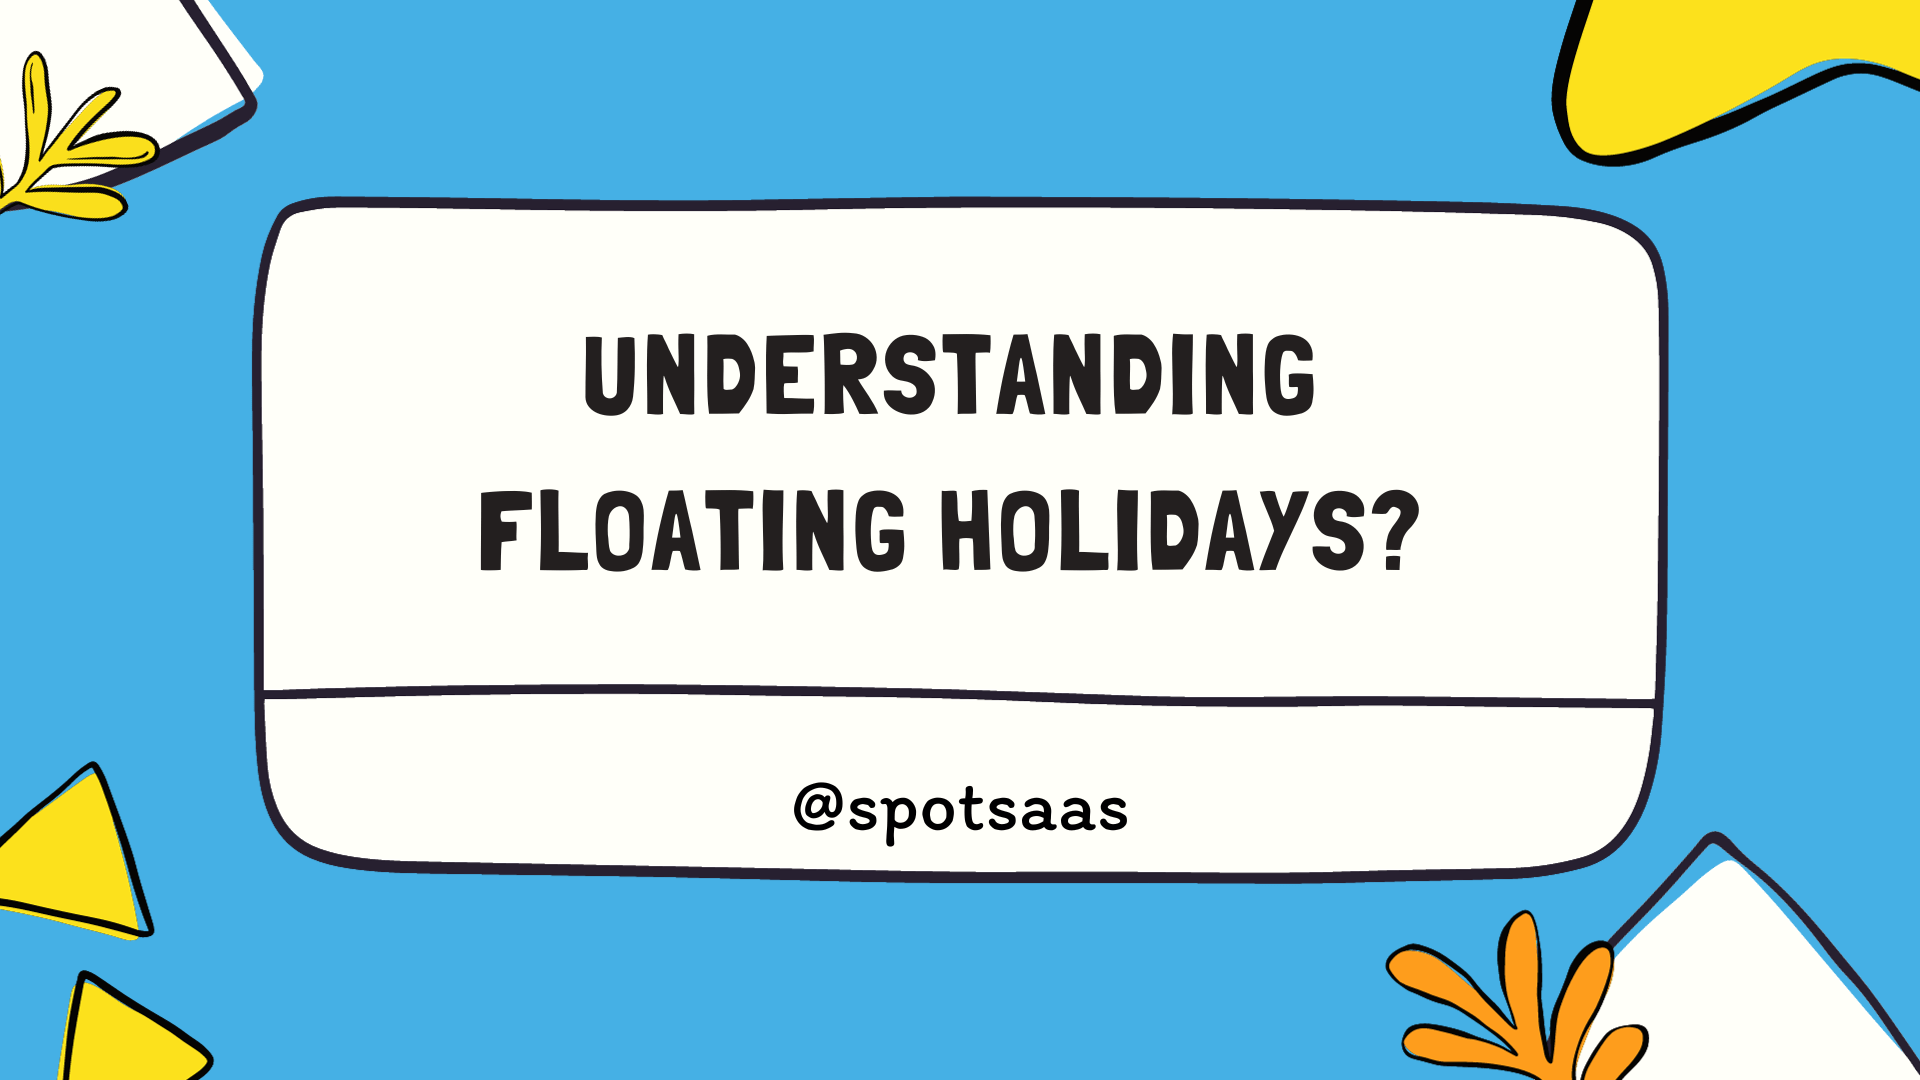 Floating Holiday